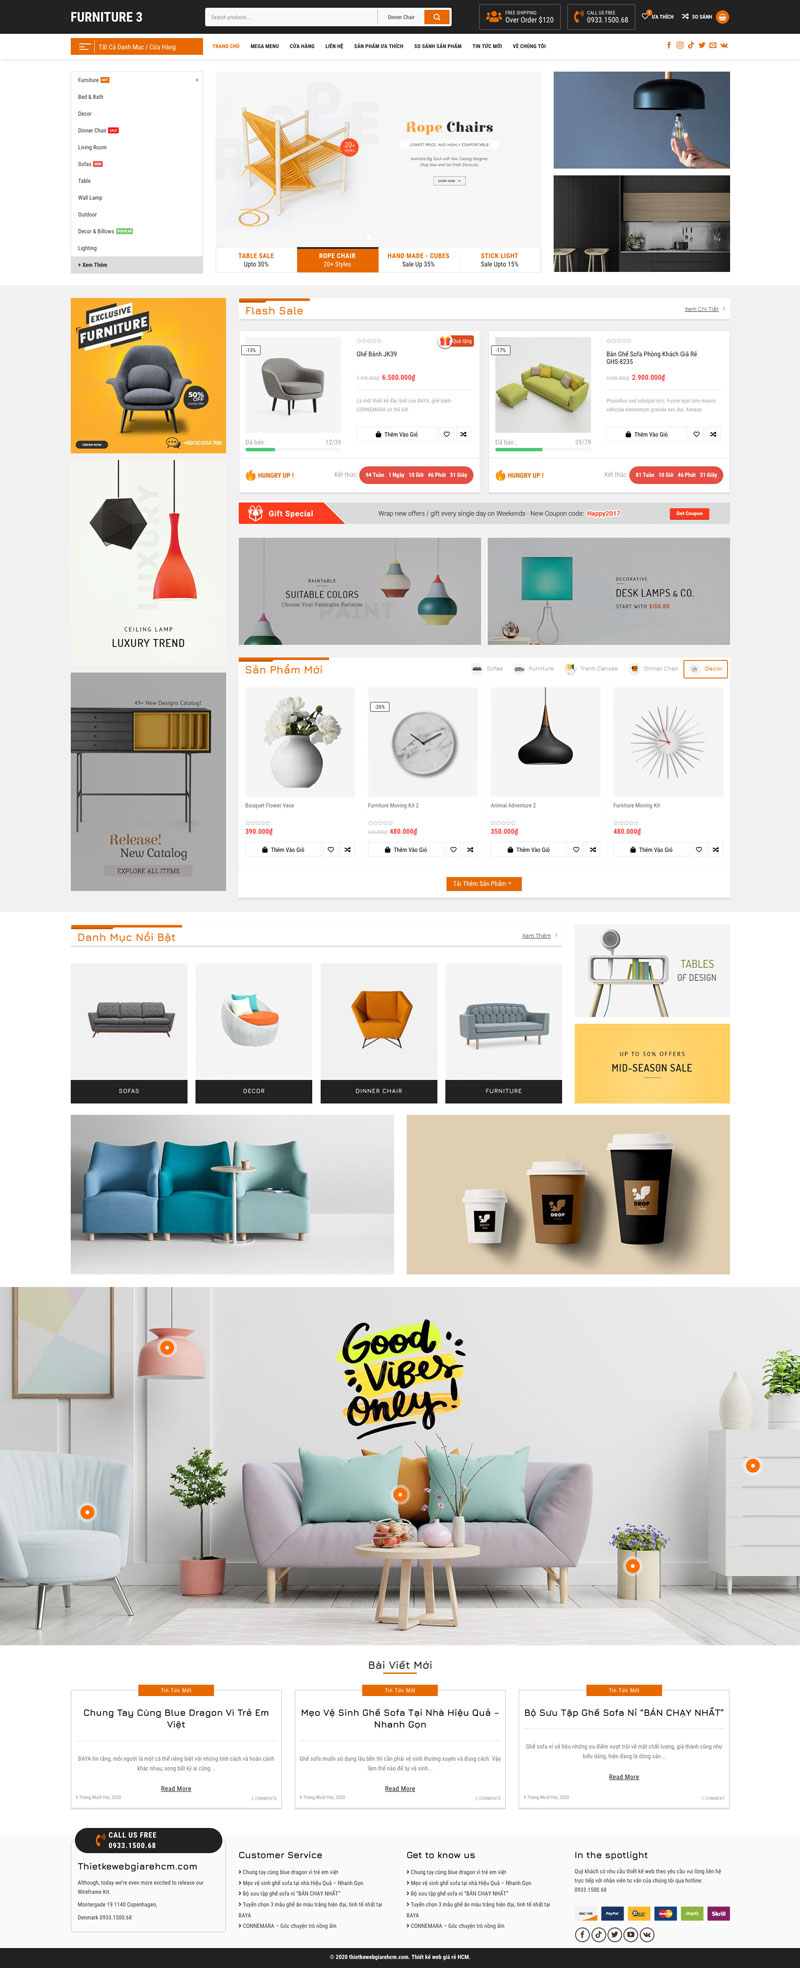 Full homepage giao diện web Furniture 3